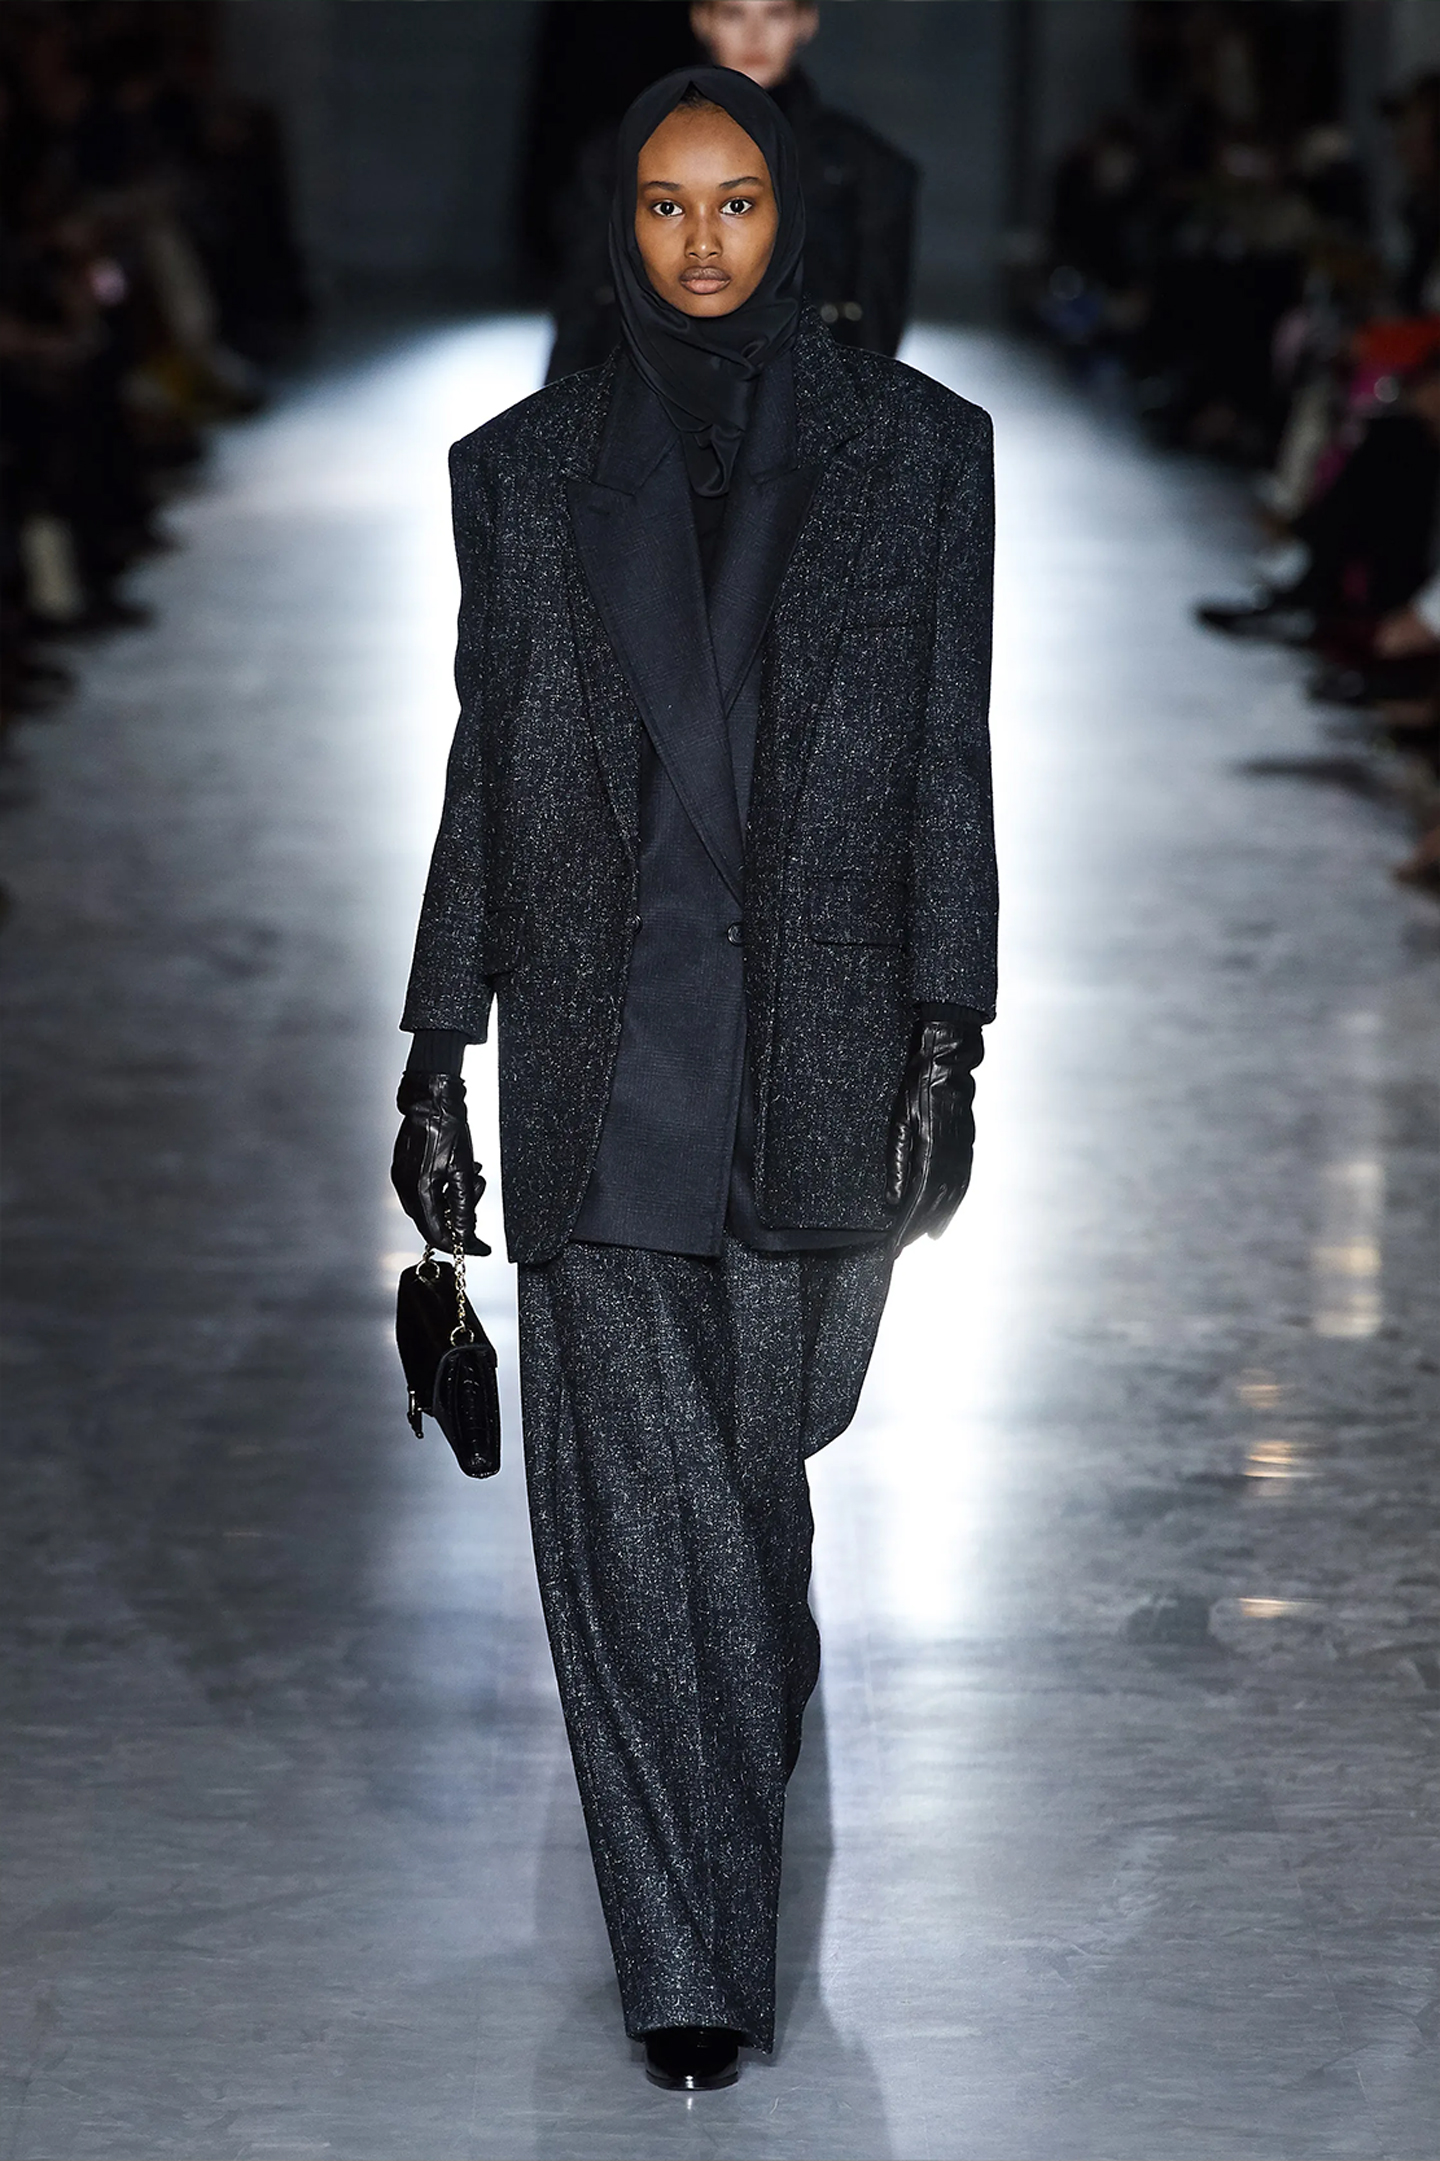 Modest fashion on the world's runways: Max Mara ready-to-wear fall 2019 